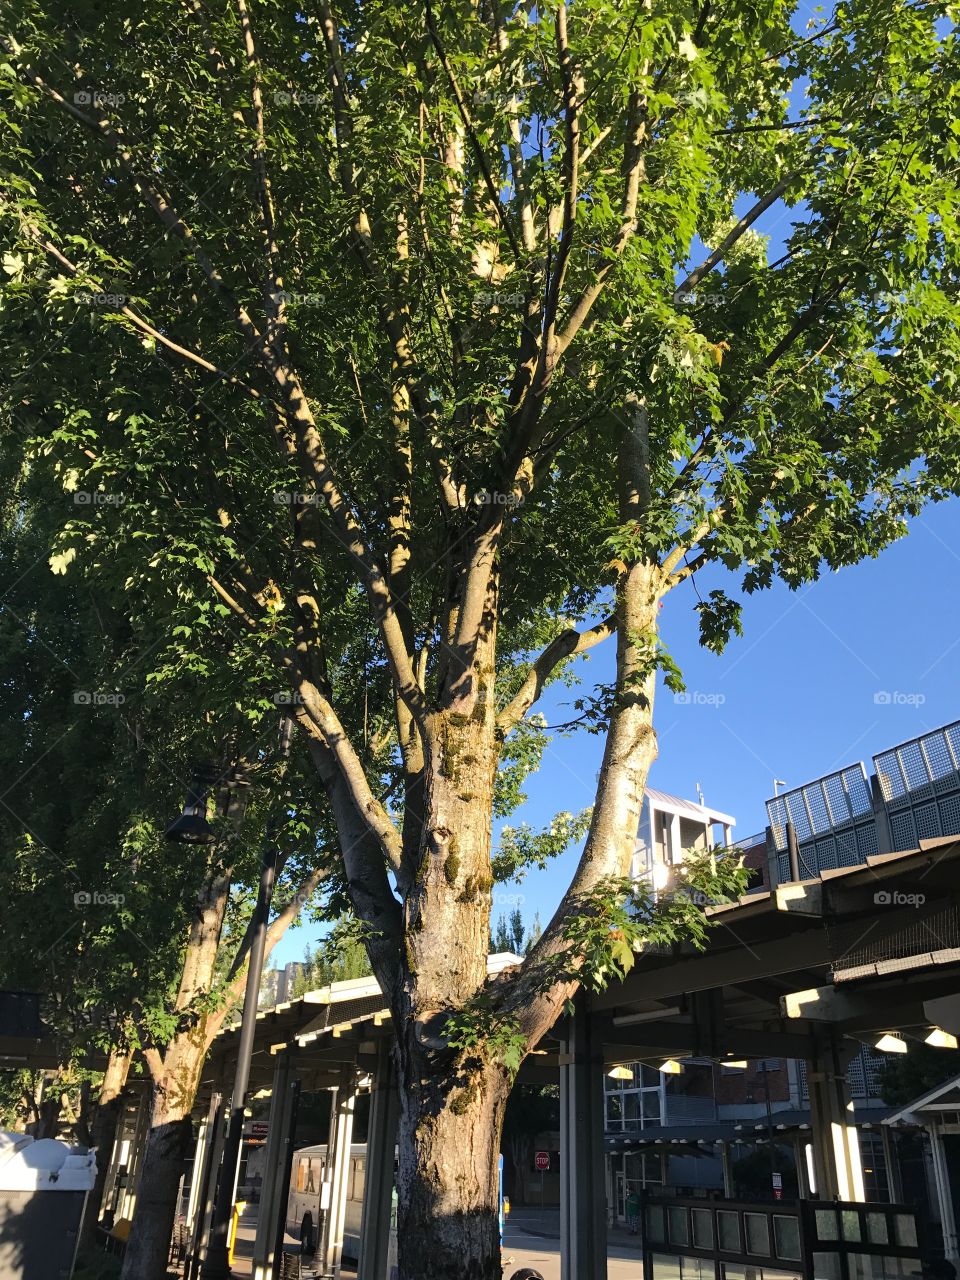 A tree filtering the sunlight at the Renton Transit Center.